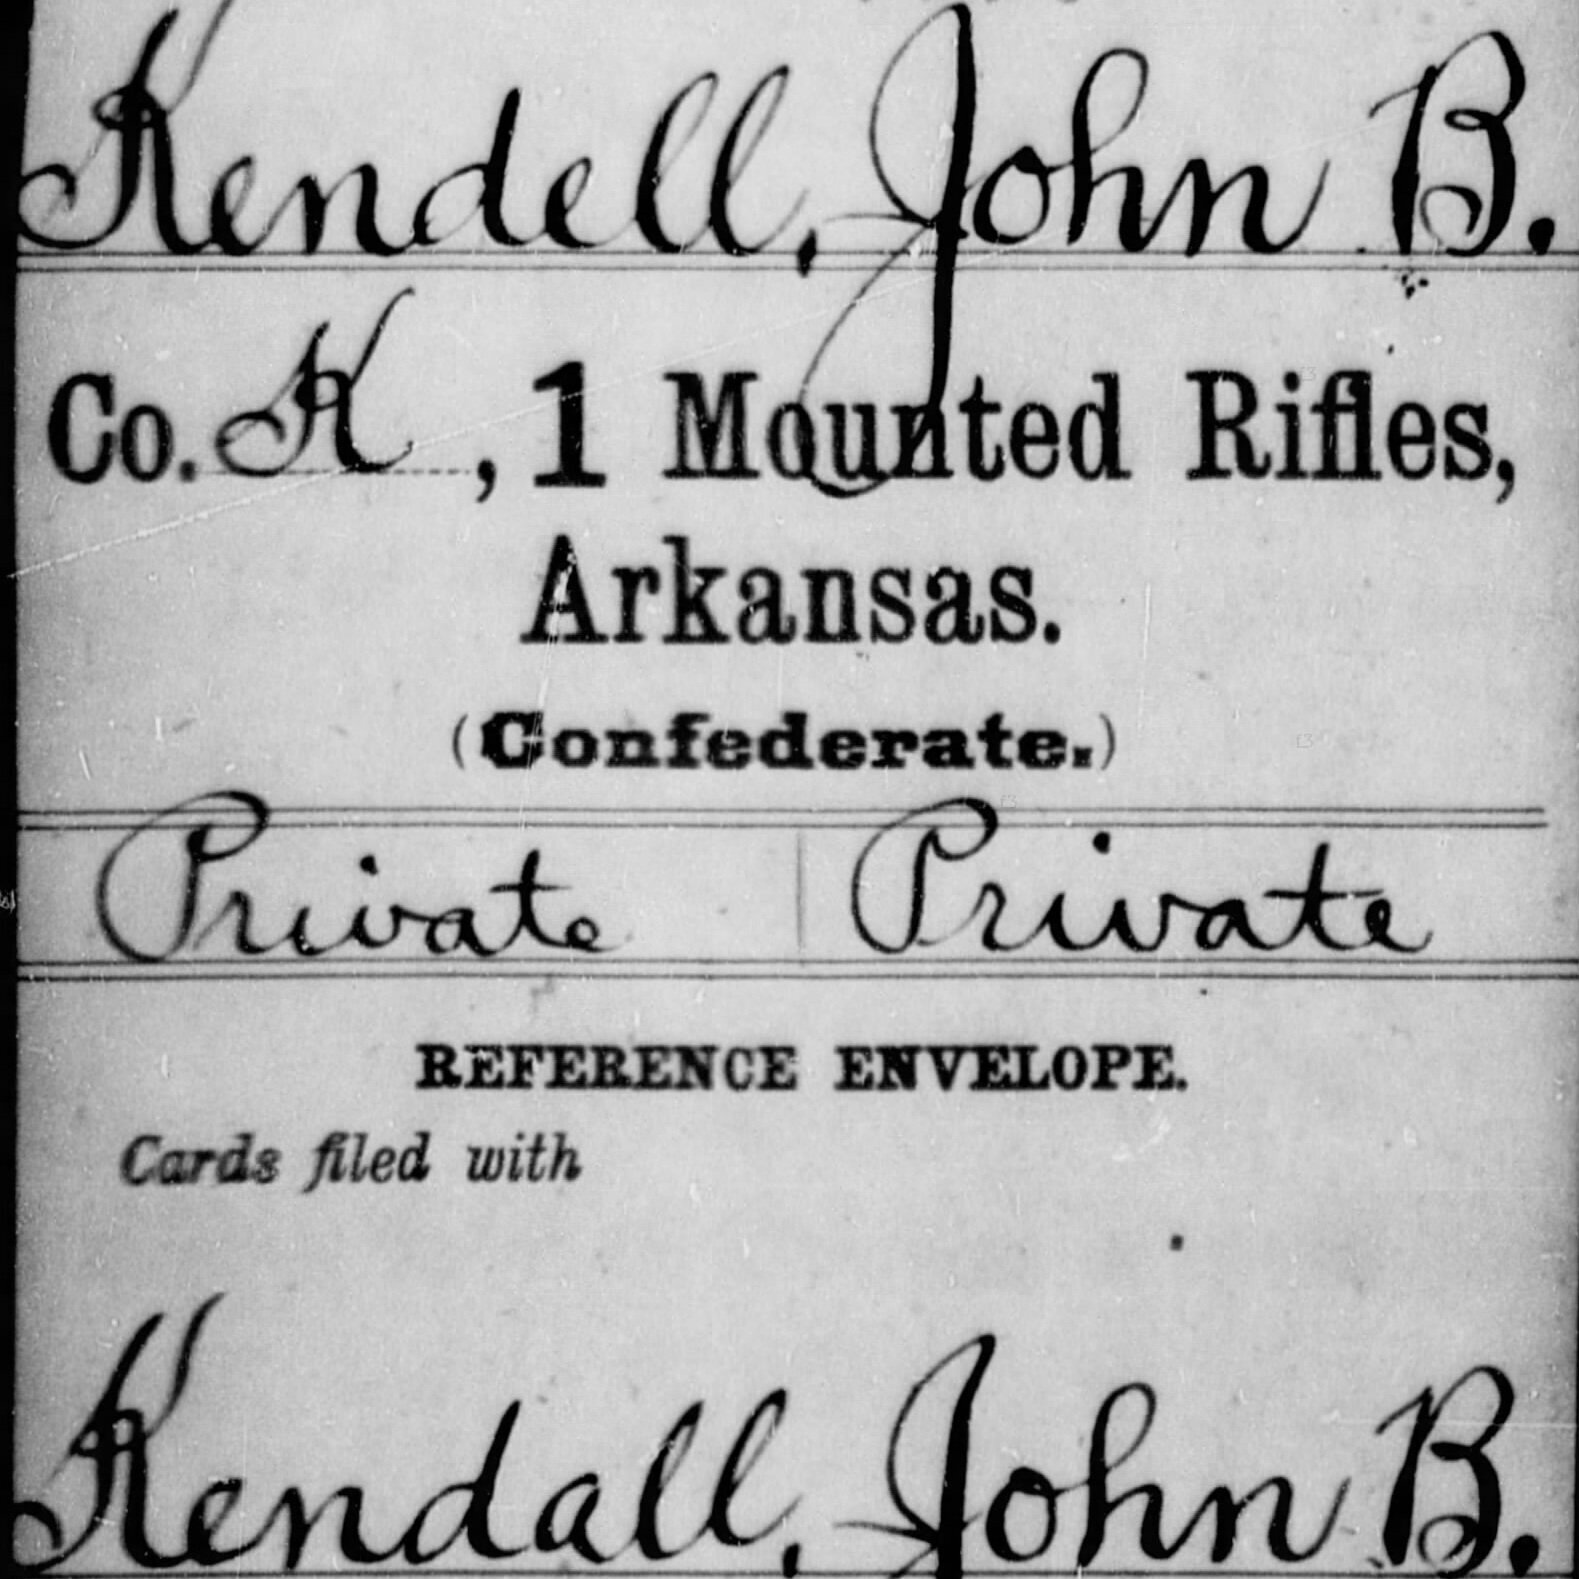 Pvt. John B. Kendall, Co. K, 1st AR Mounted Rifles, CSA